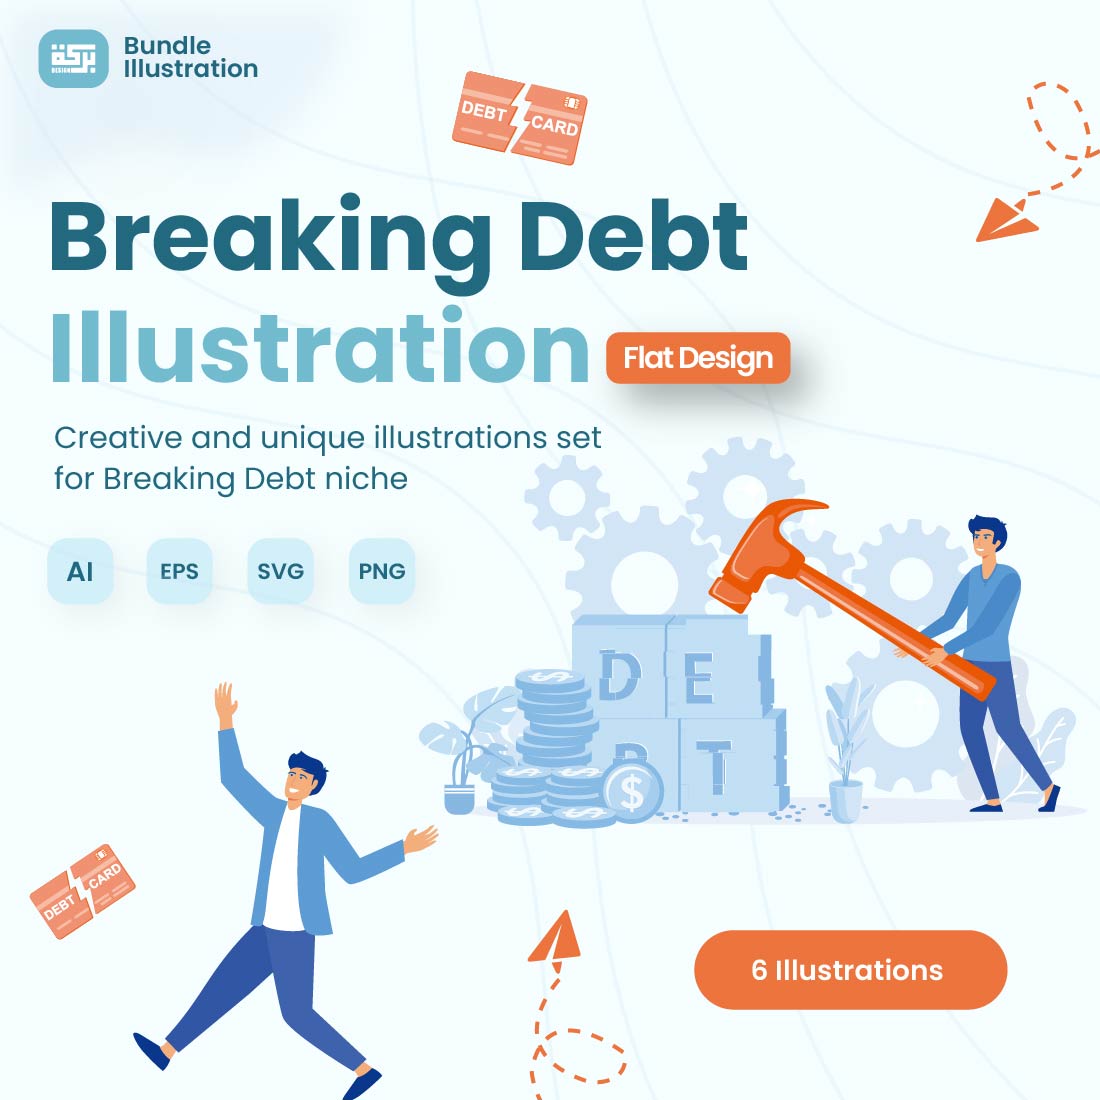 Illustration Design Breaking Debt cover image.